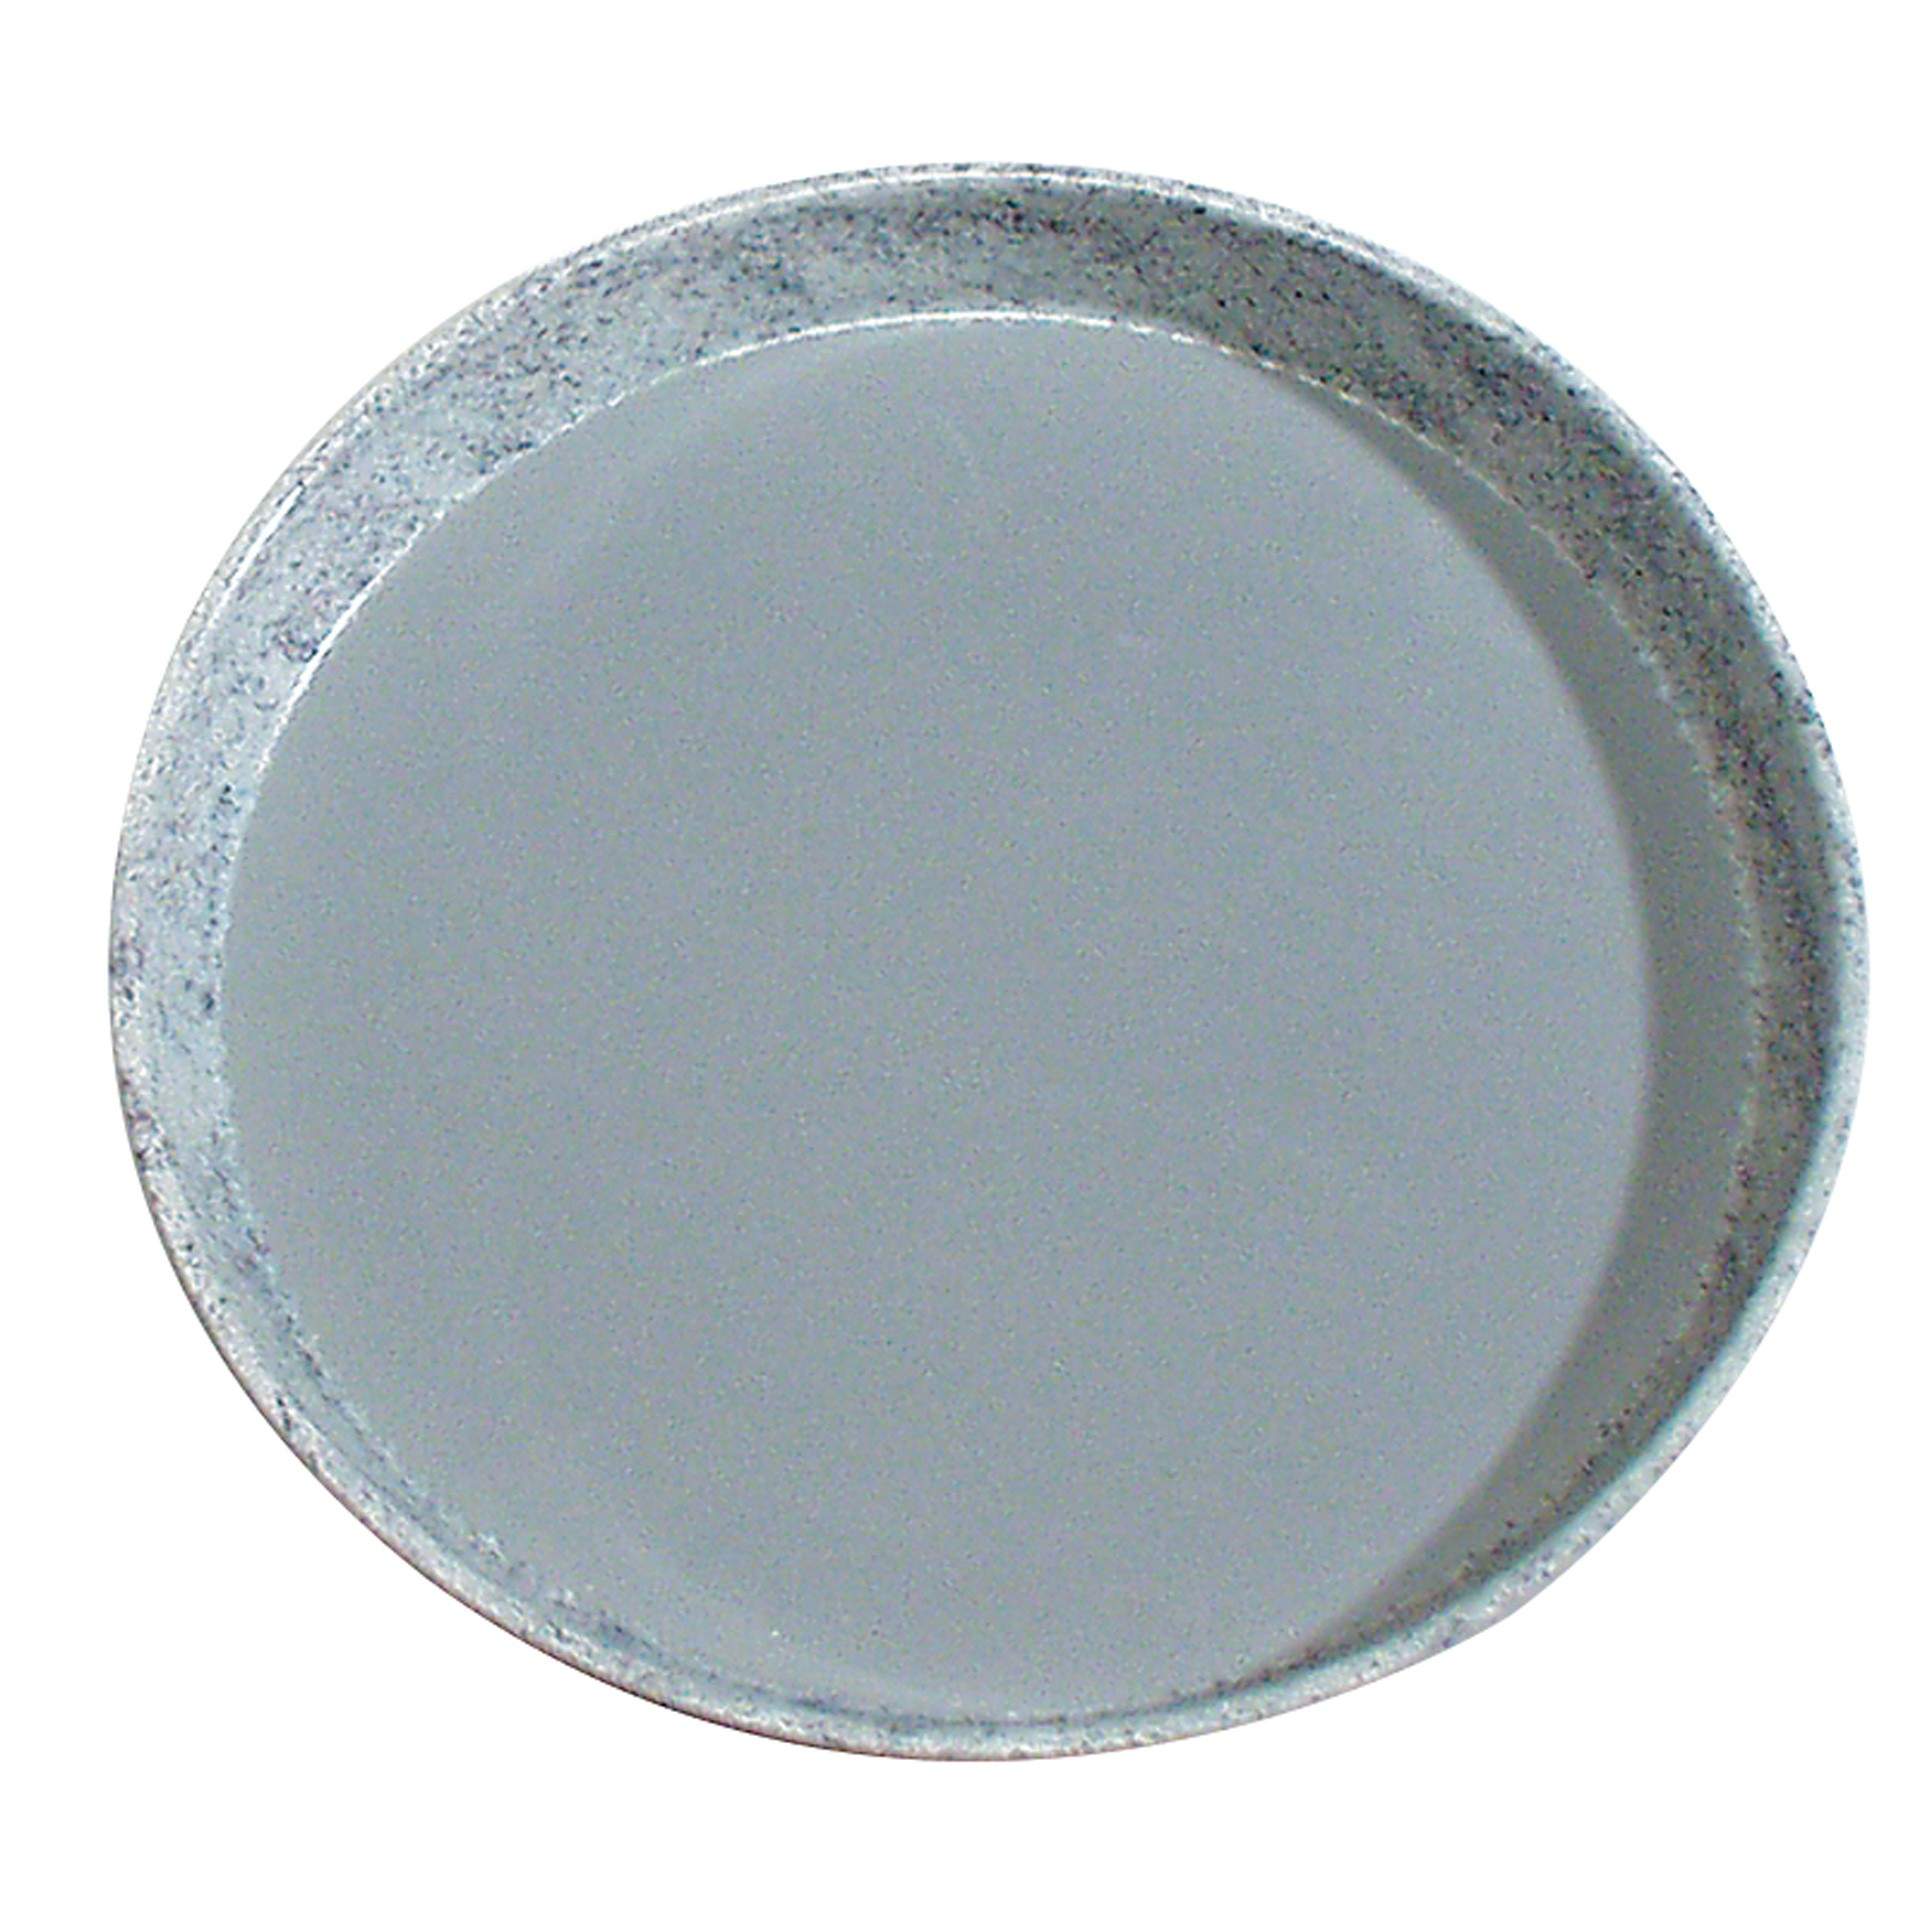 Bierglasträger - rutschfeste Oberfläche - grau - oval - Abm. 28 x 20 x 1,5 cm - glasfaserverstärkter Kunststoff - 507-B